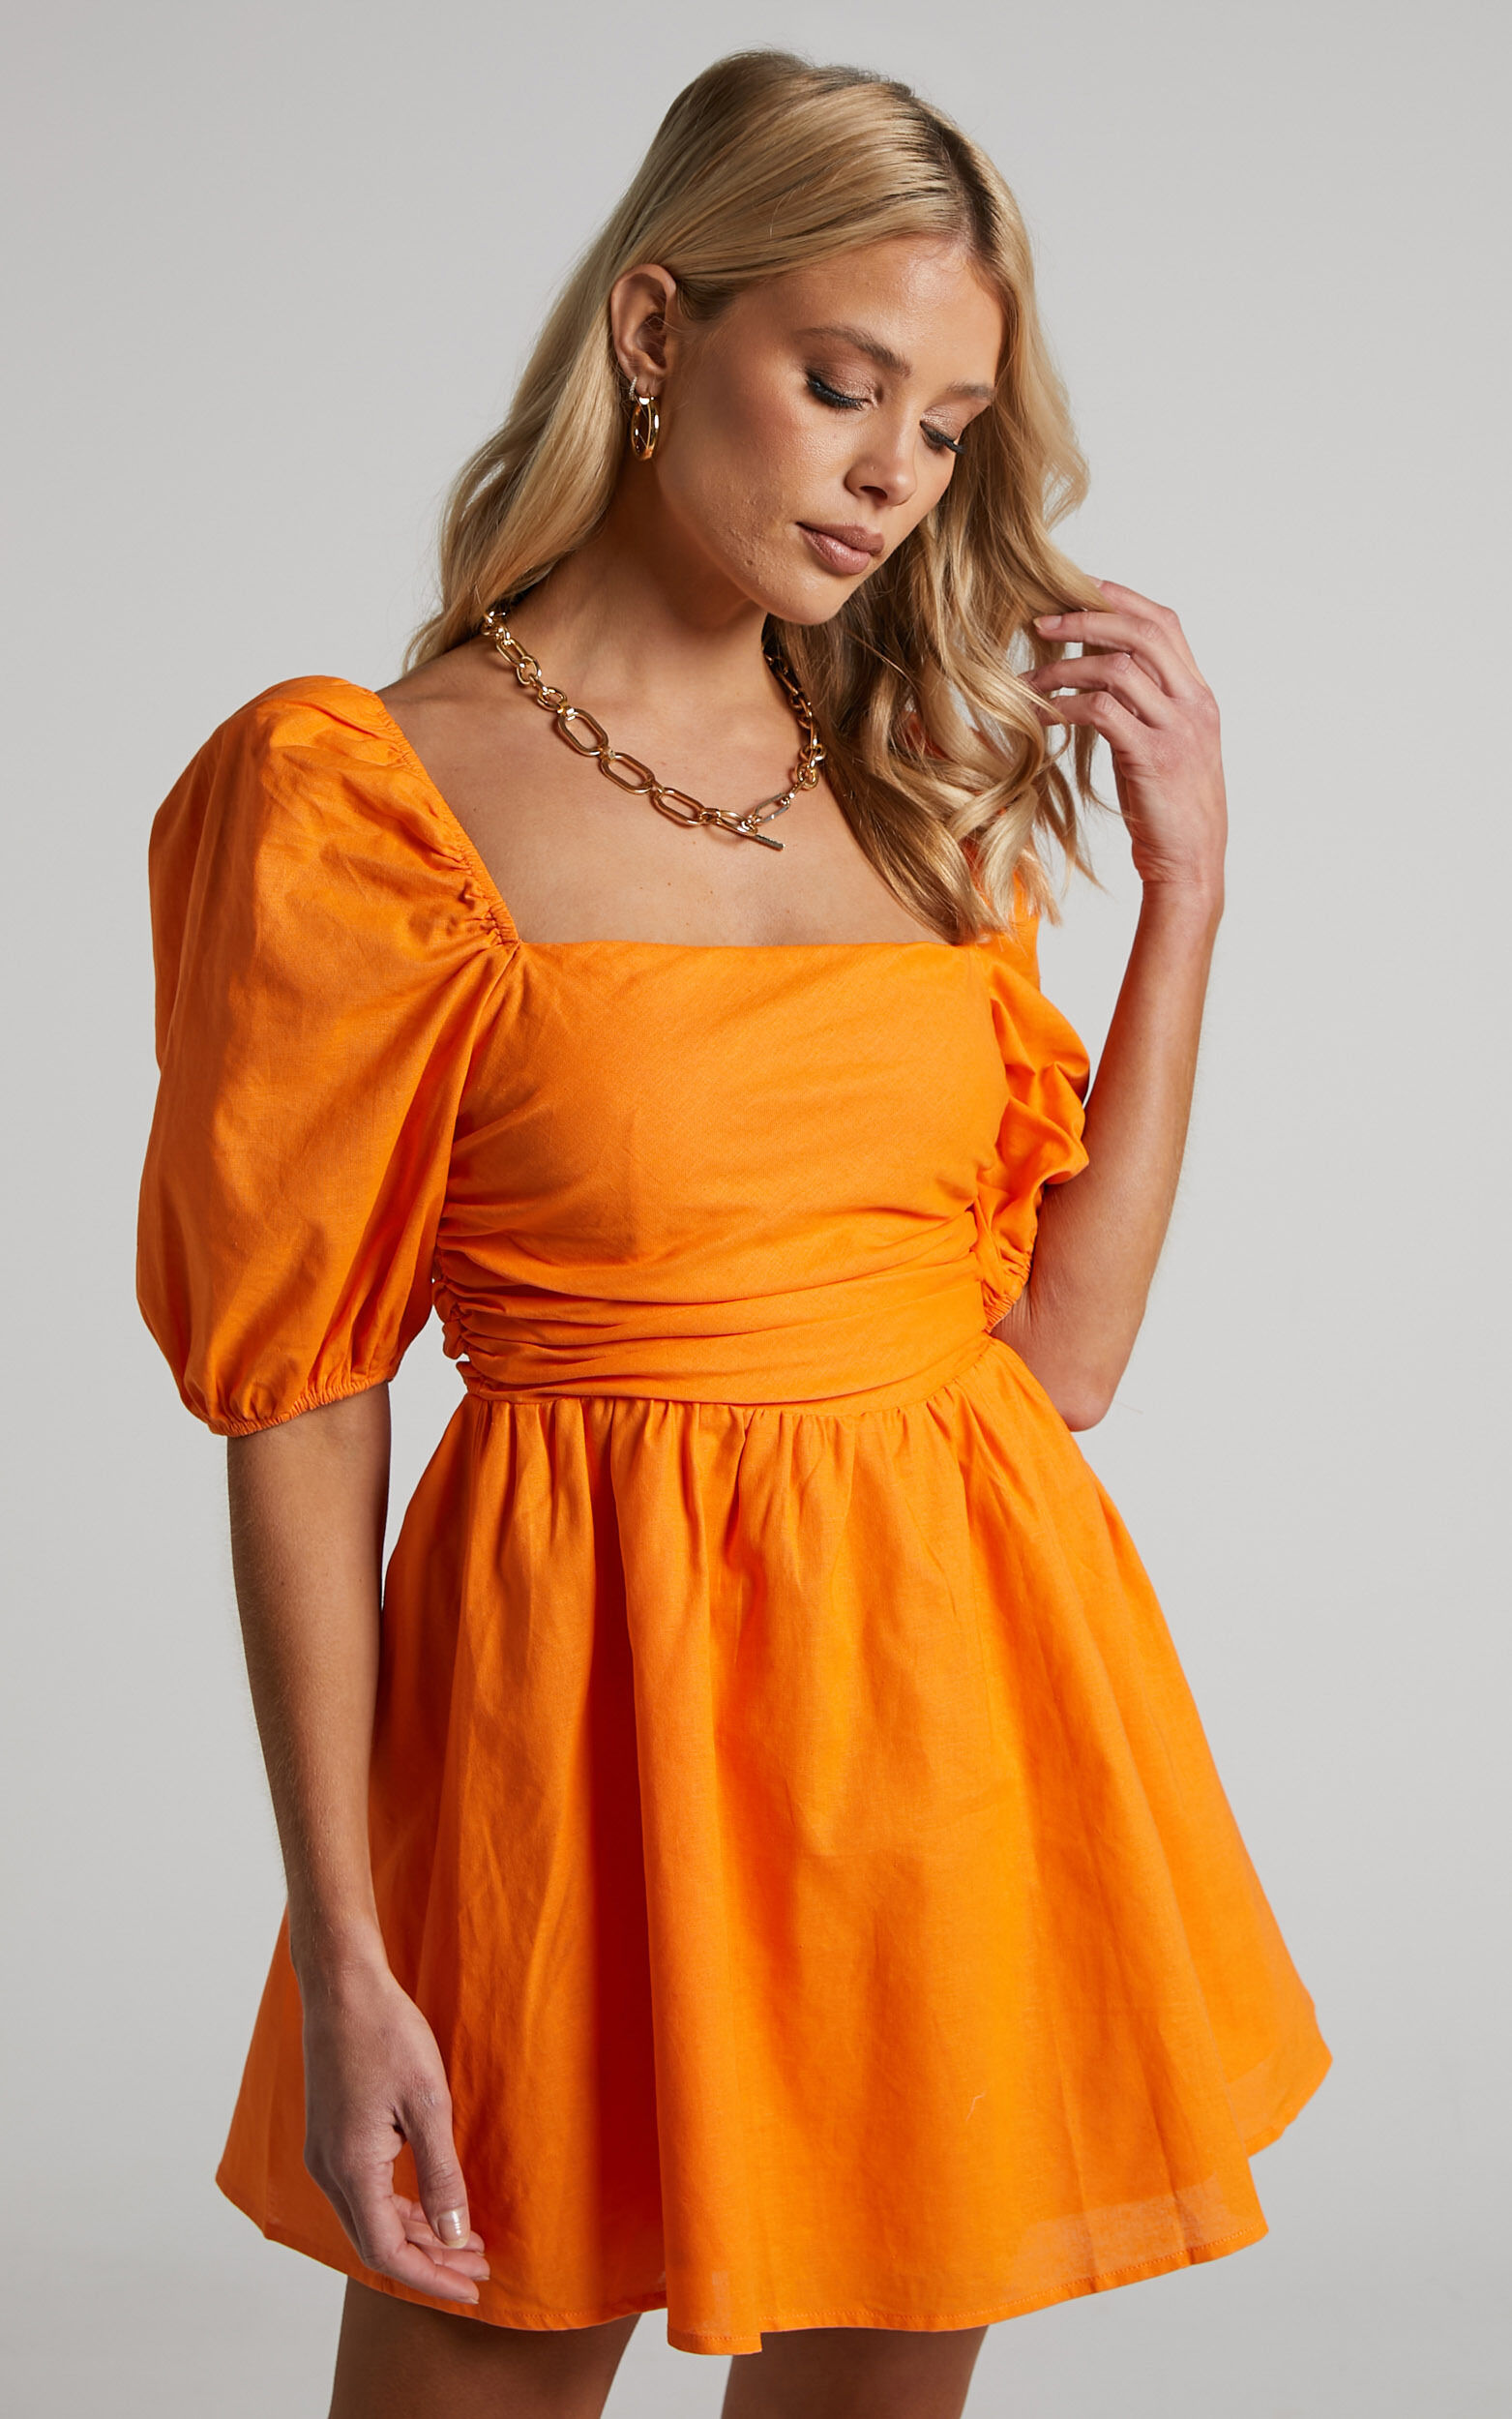 Claudina Mini Dress - Puff Sleeve Ruched Bodice Dress in Bright Orange - 04, ORG2